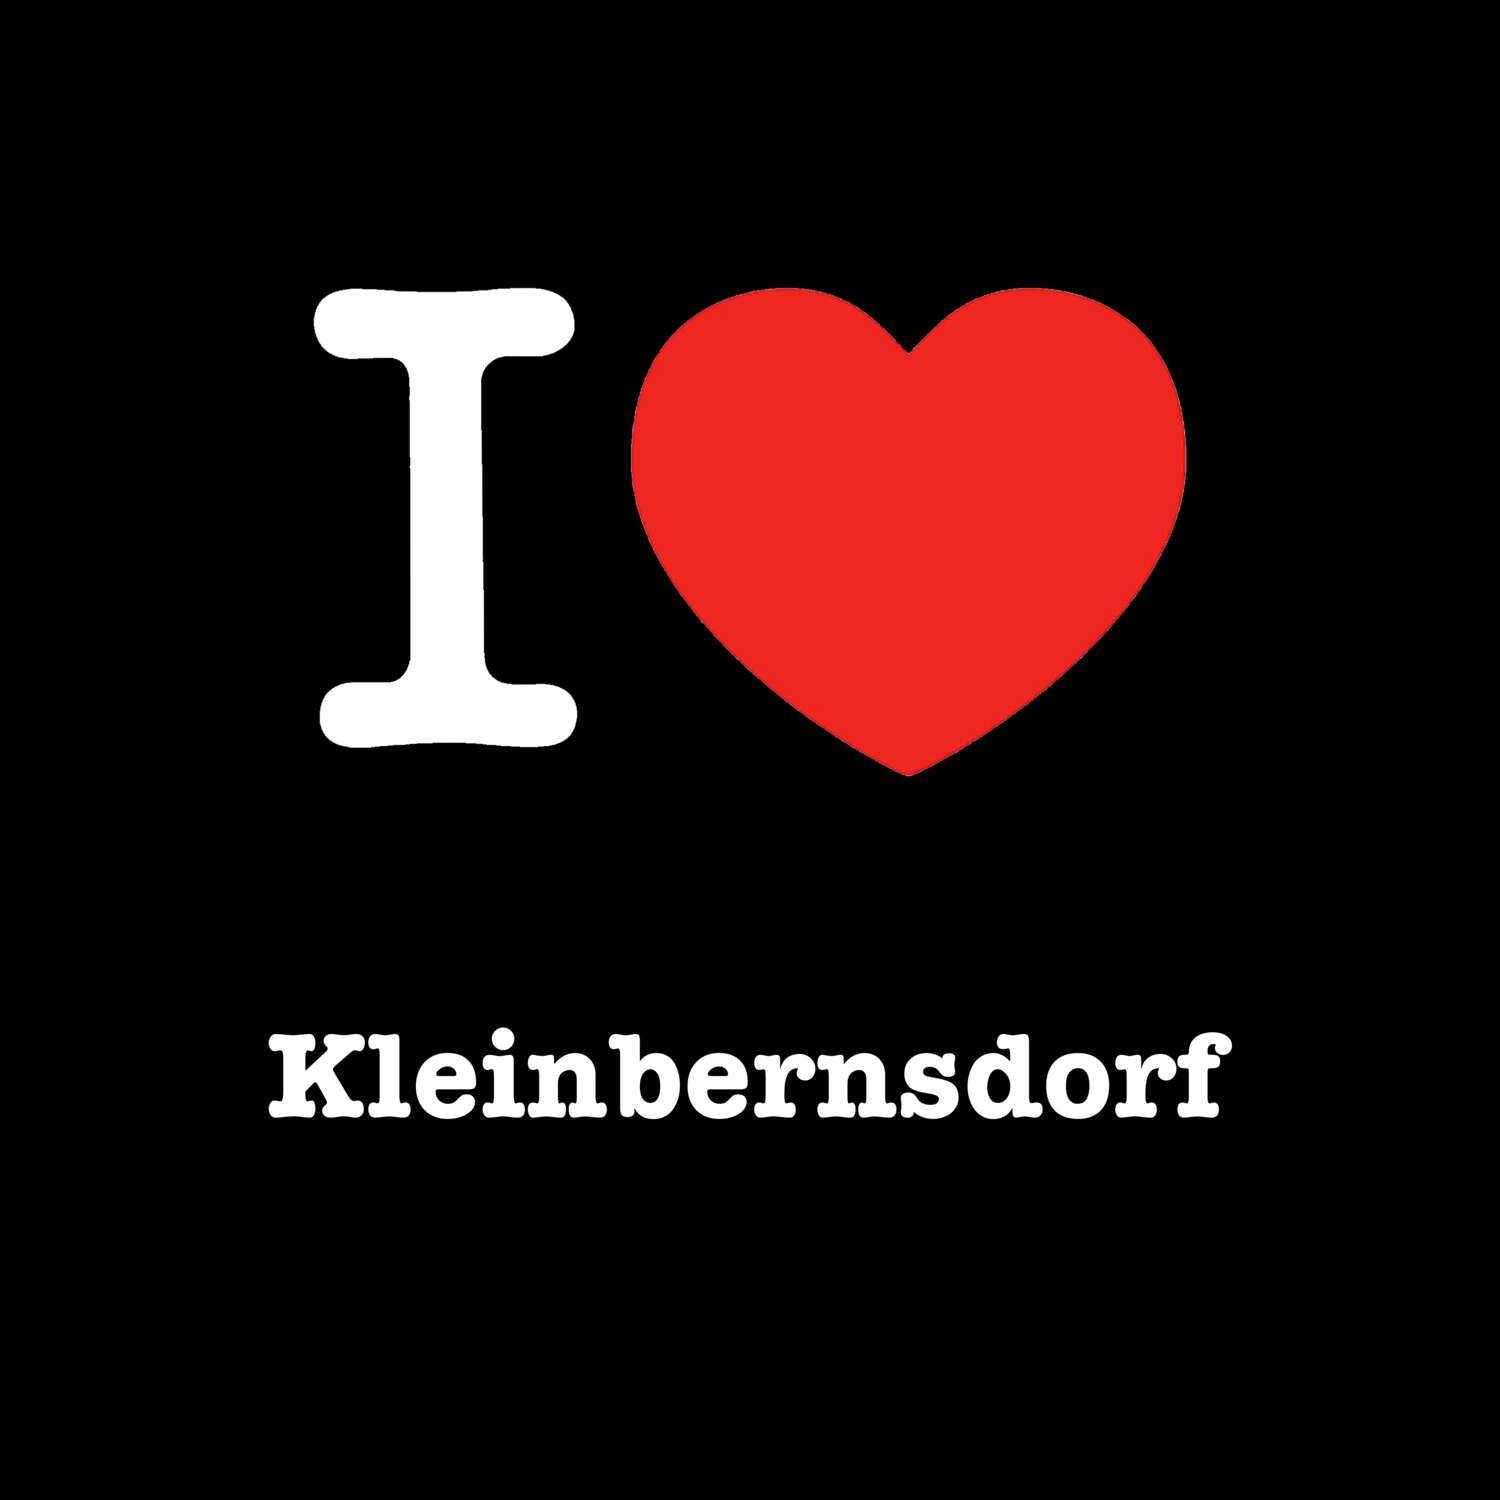 Kleinbernsdorf T-Shirt »I love«